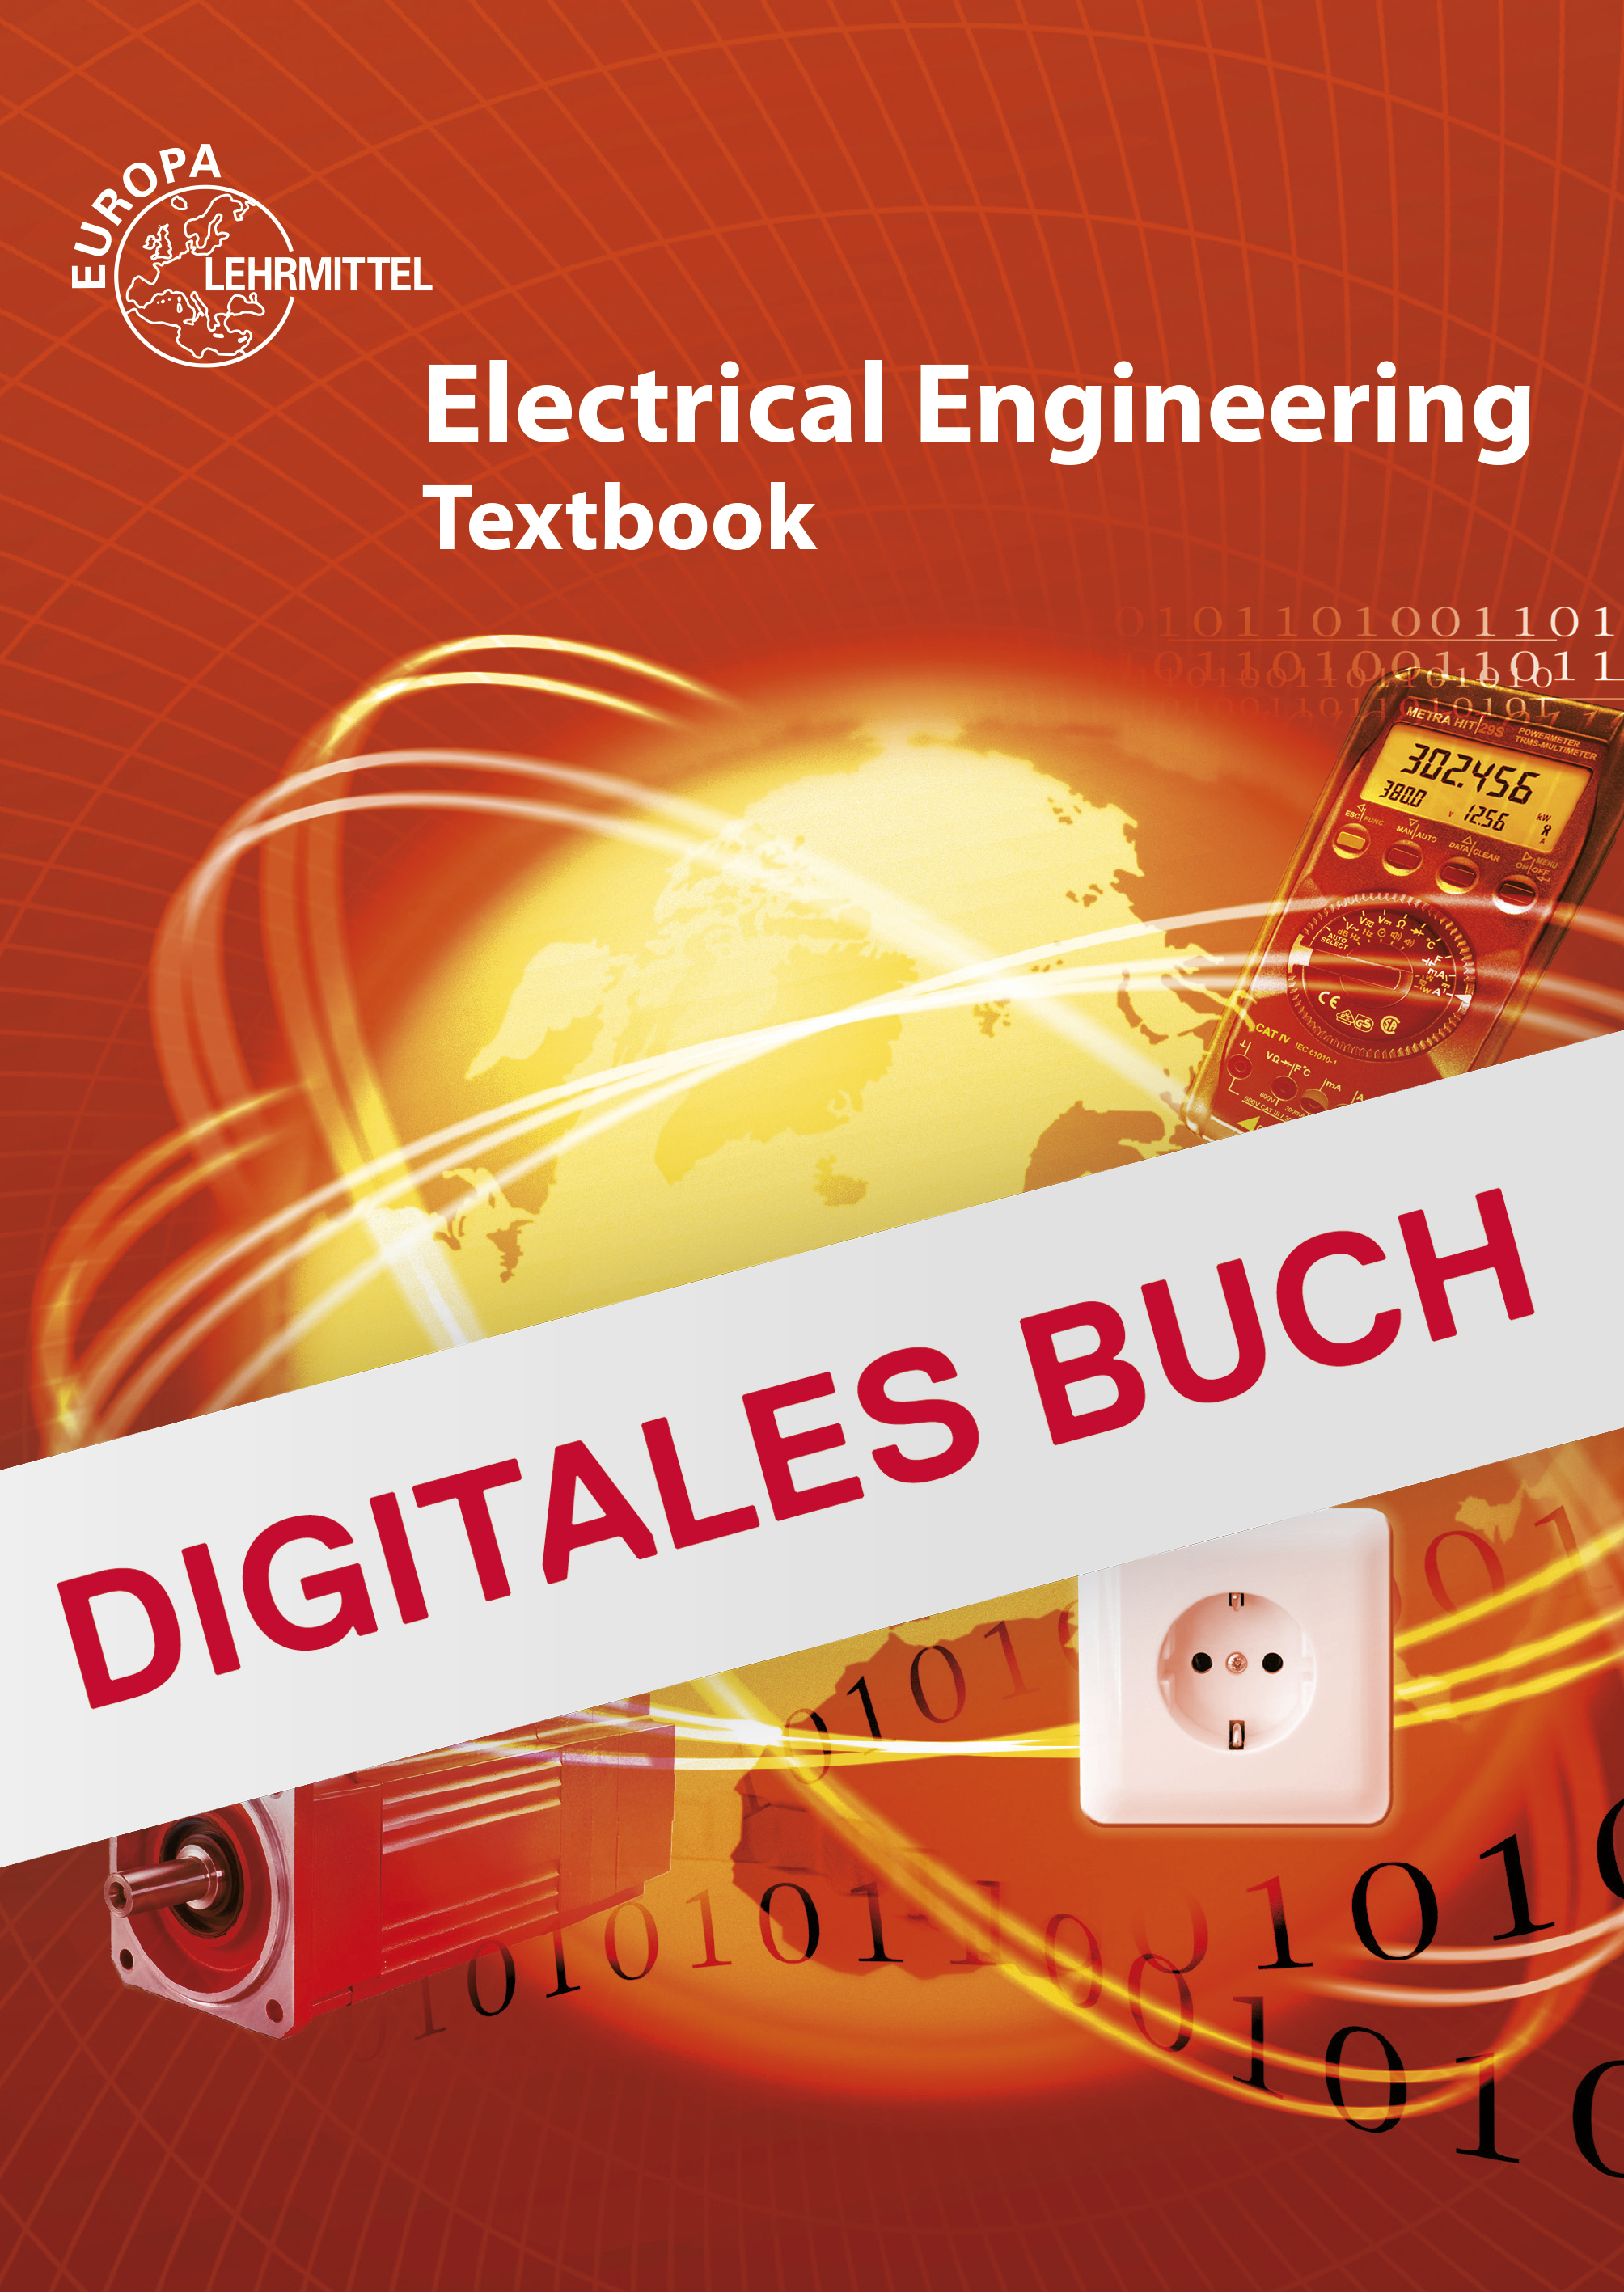 Electrical Engineering Textbook - Digitales Buch